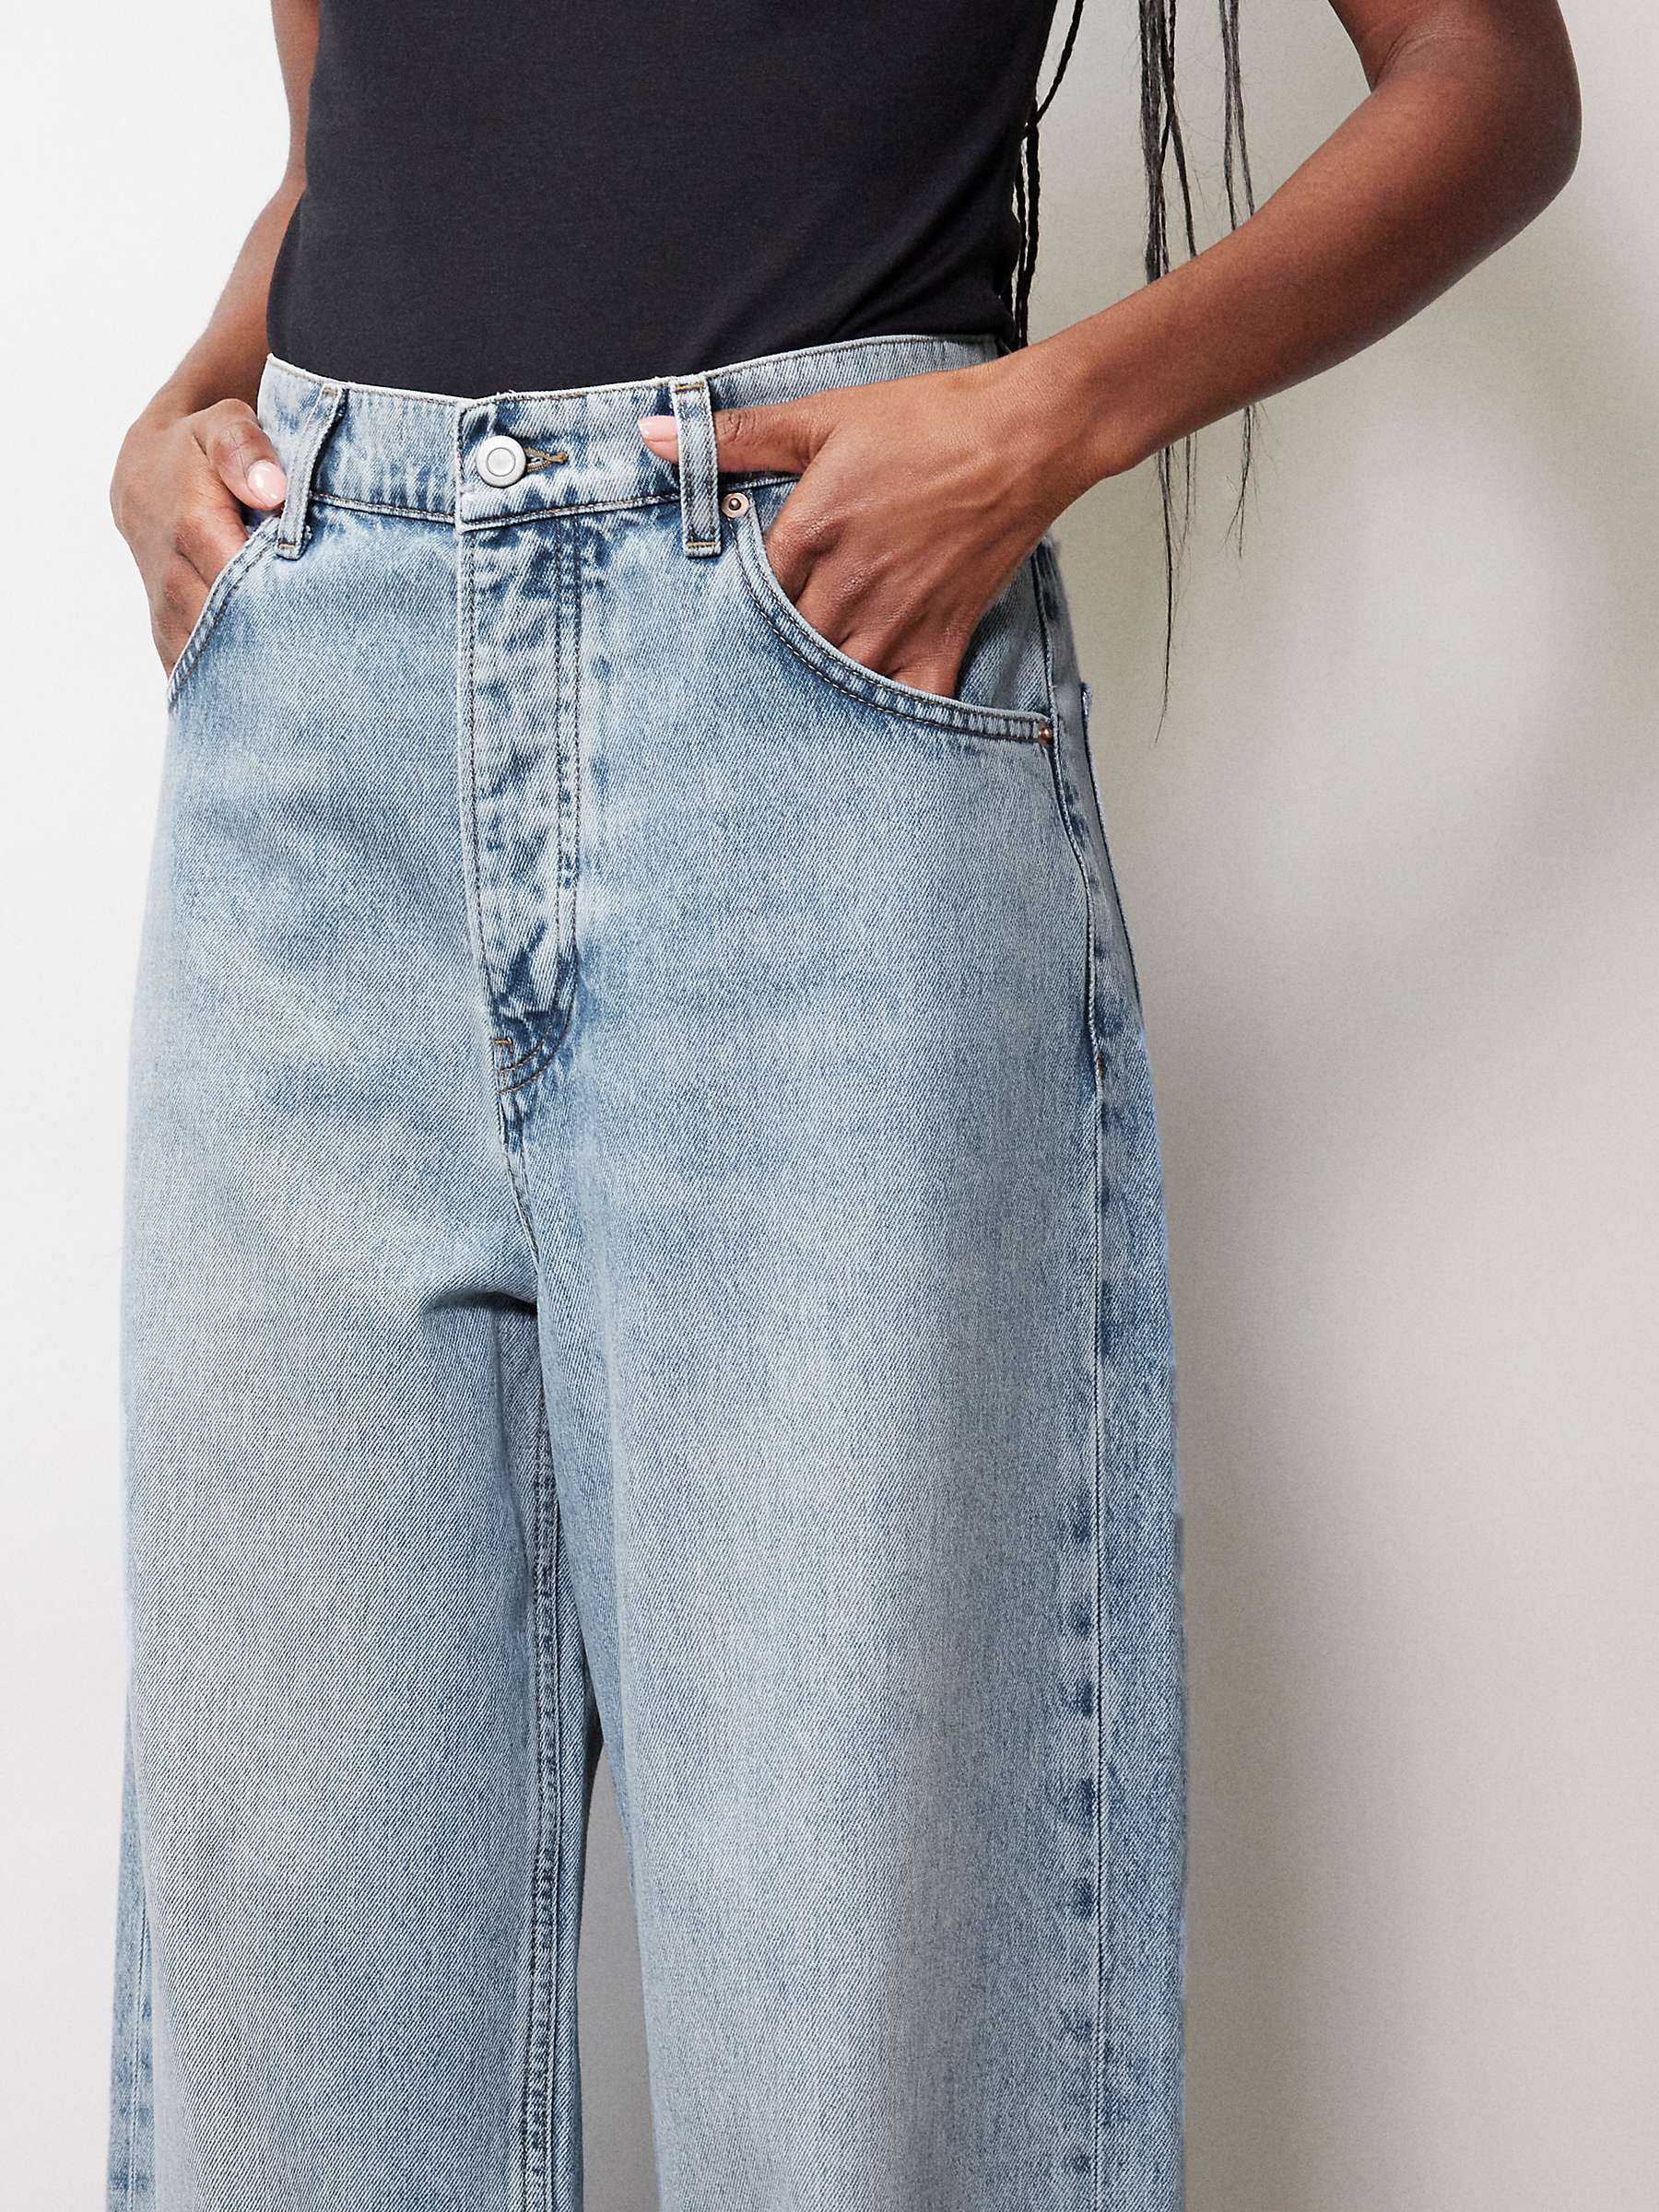 Buy Albaray Turn Up Jeans, Indigo Online at johnlewis.com